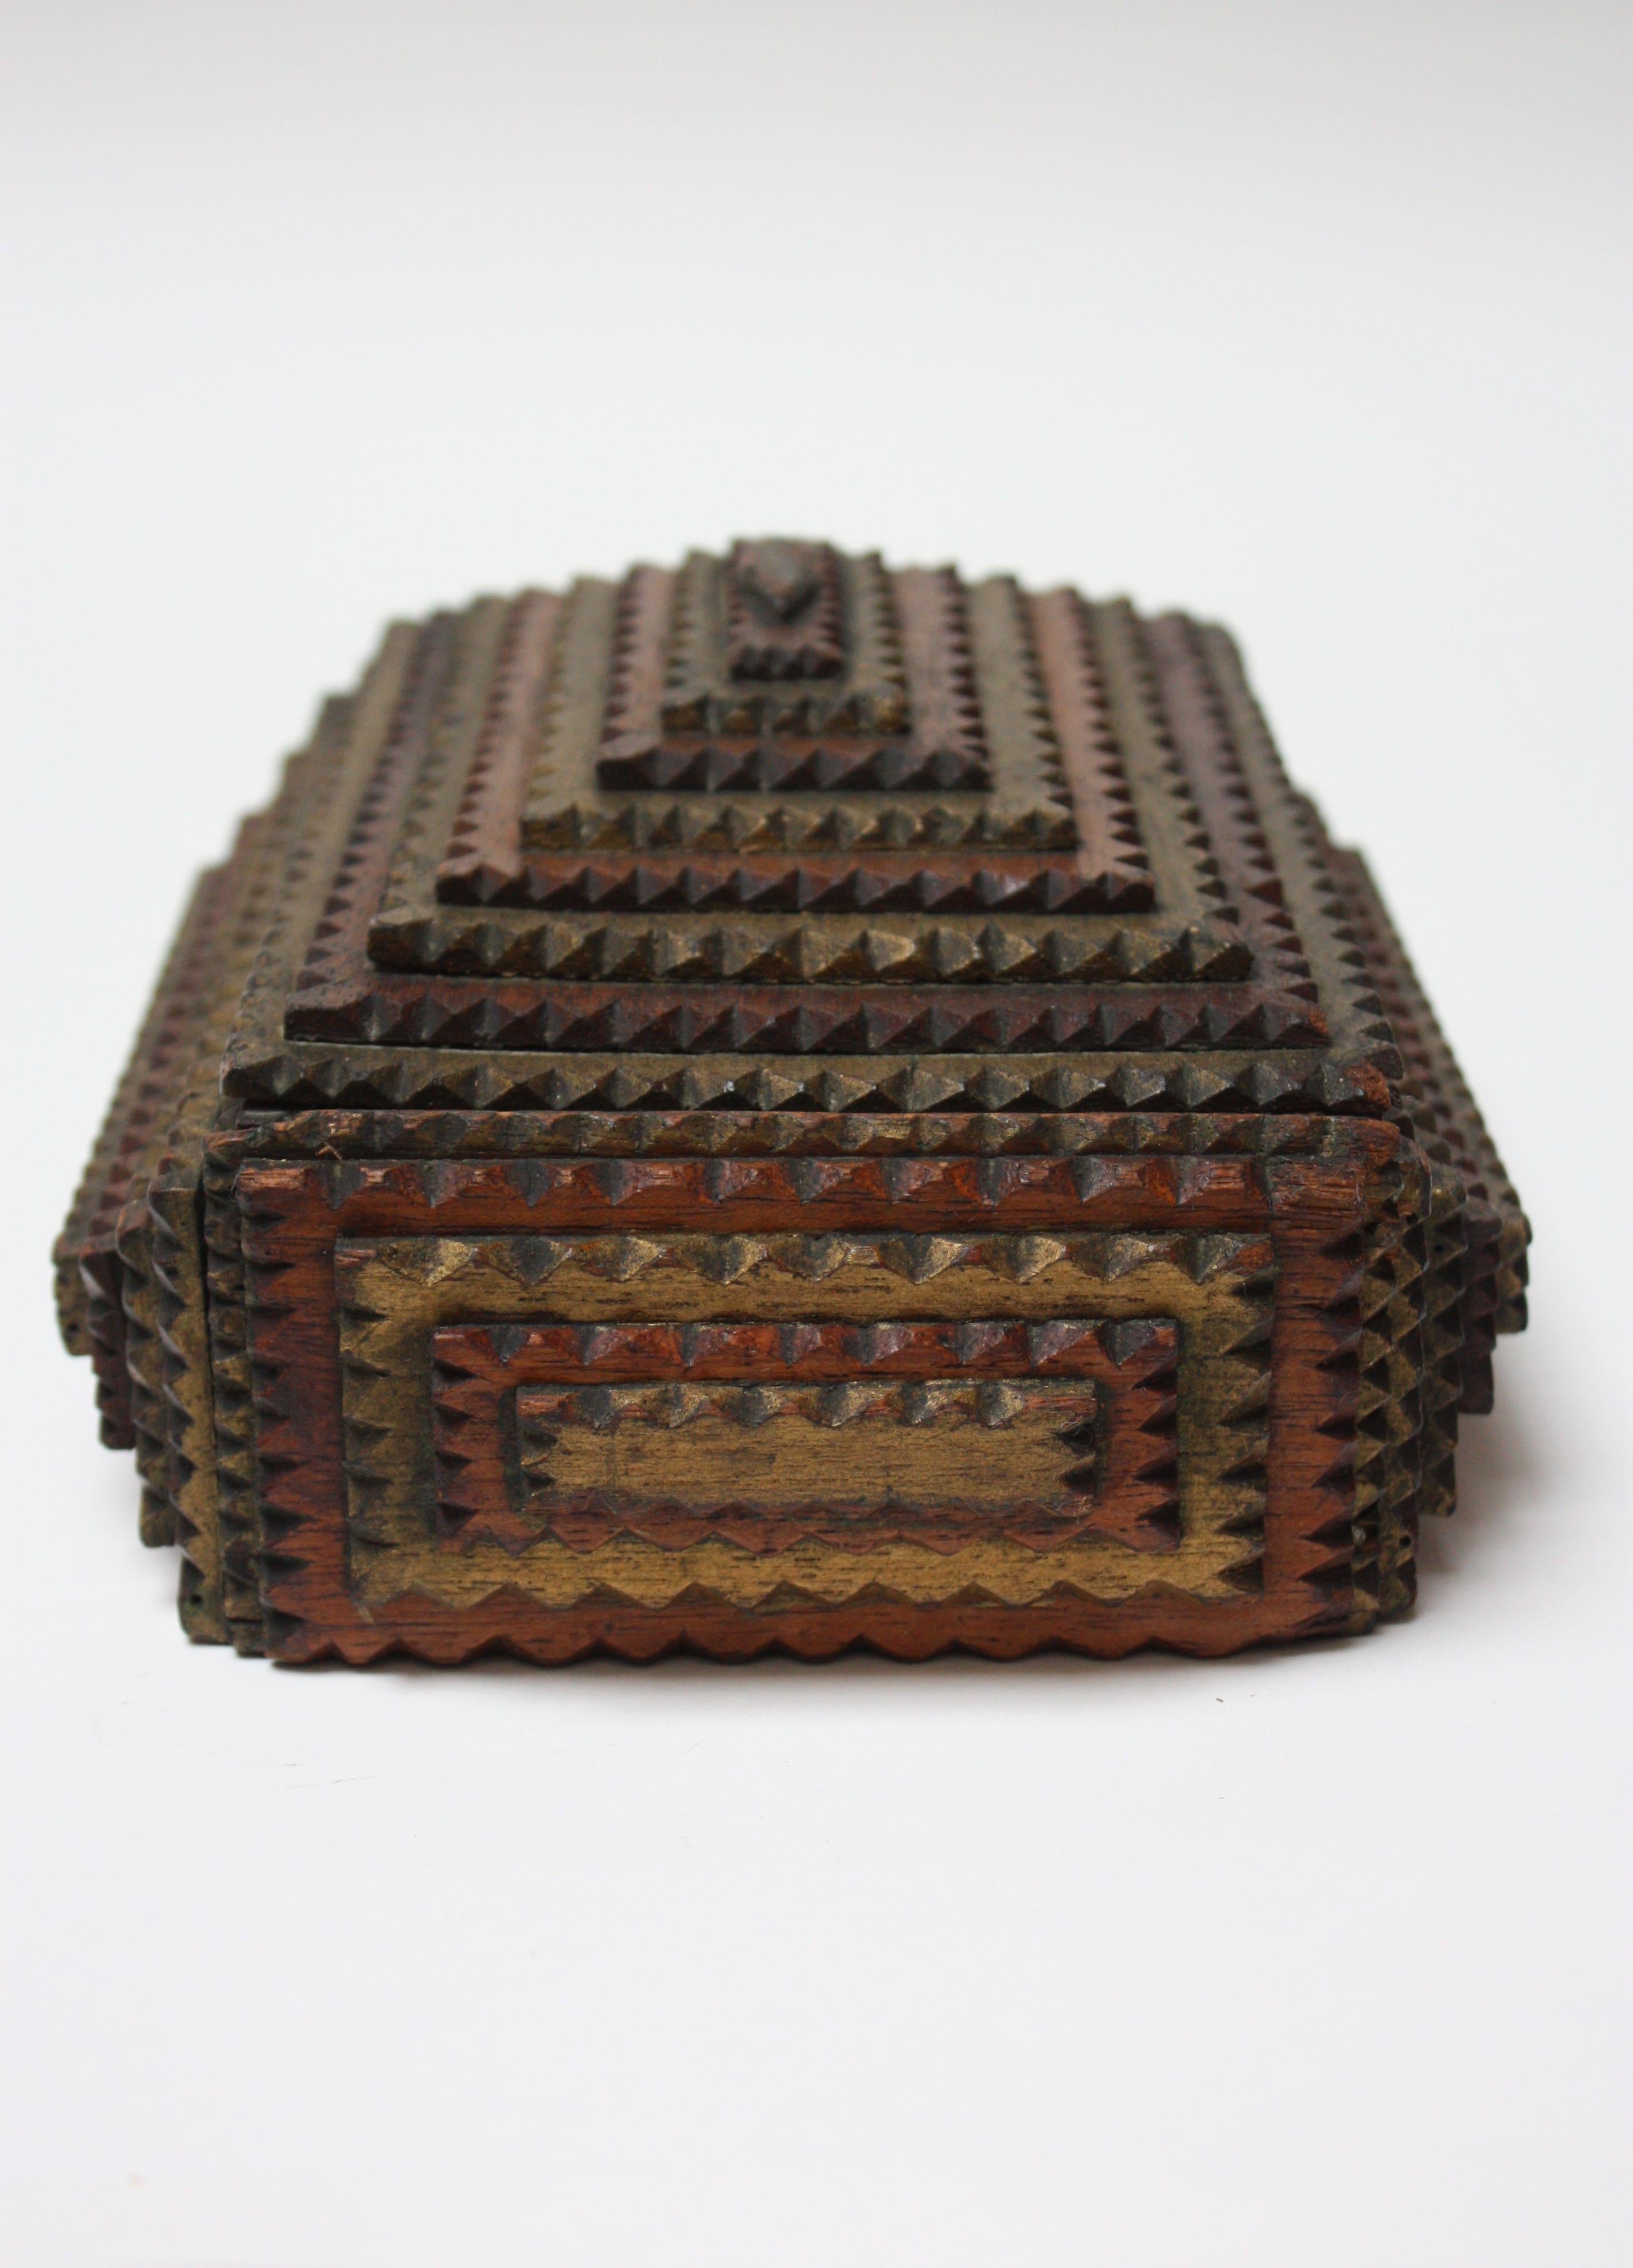 Folk Art Small Chip-Carved Tramp Art Box